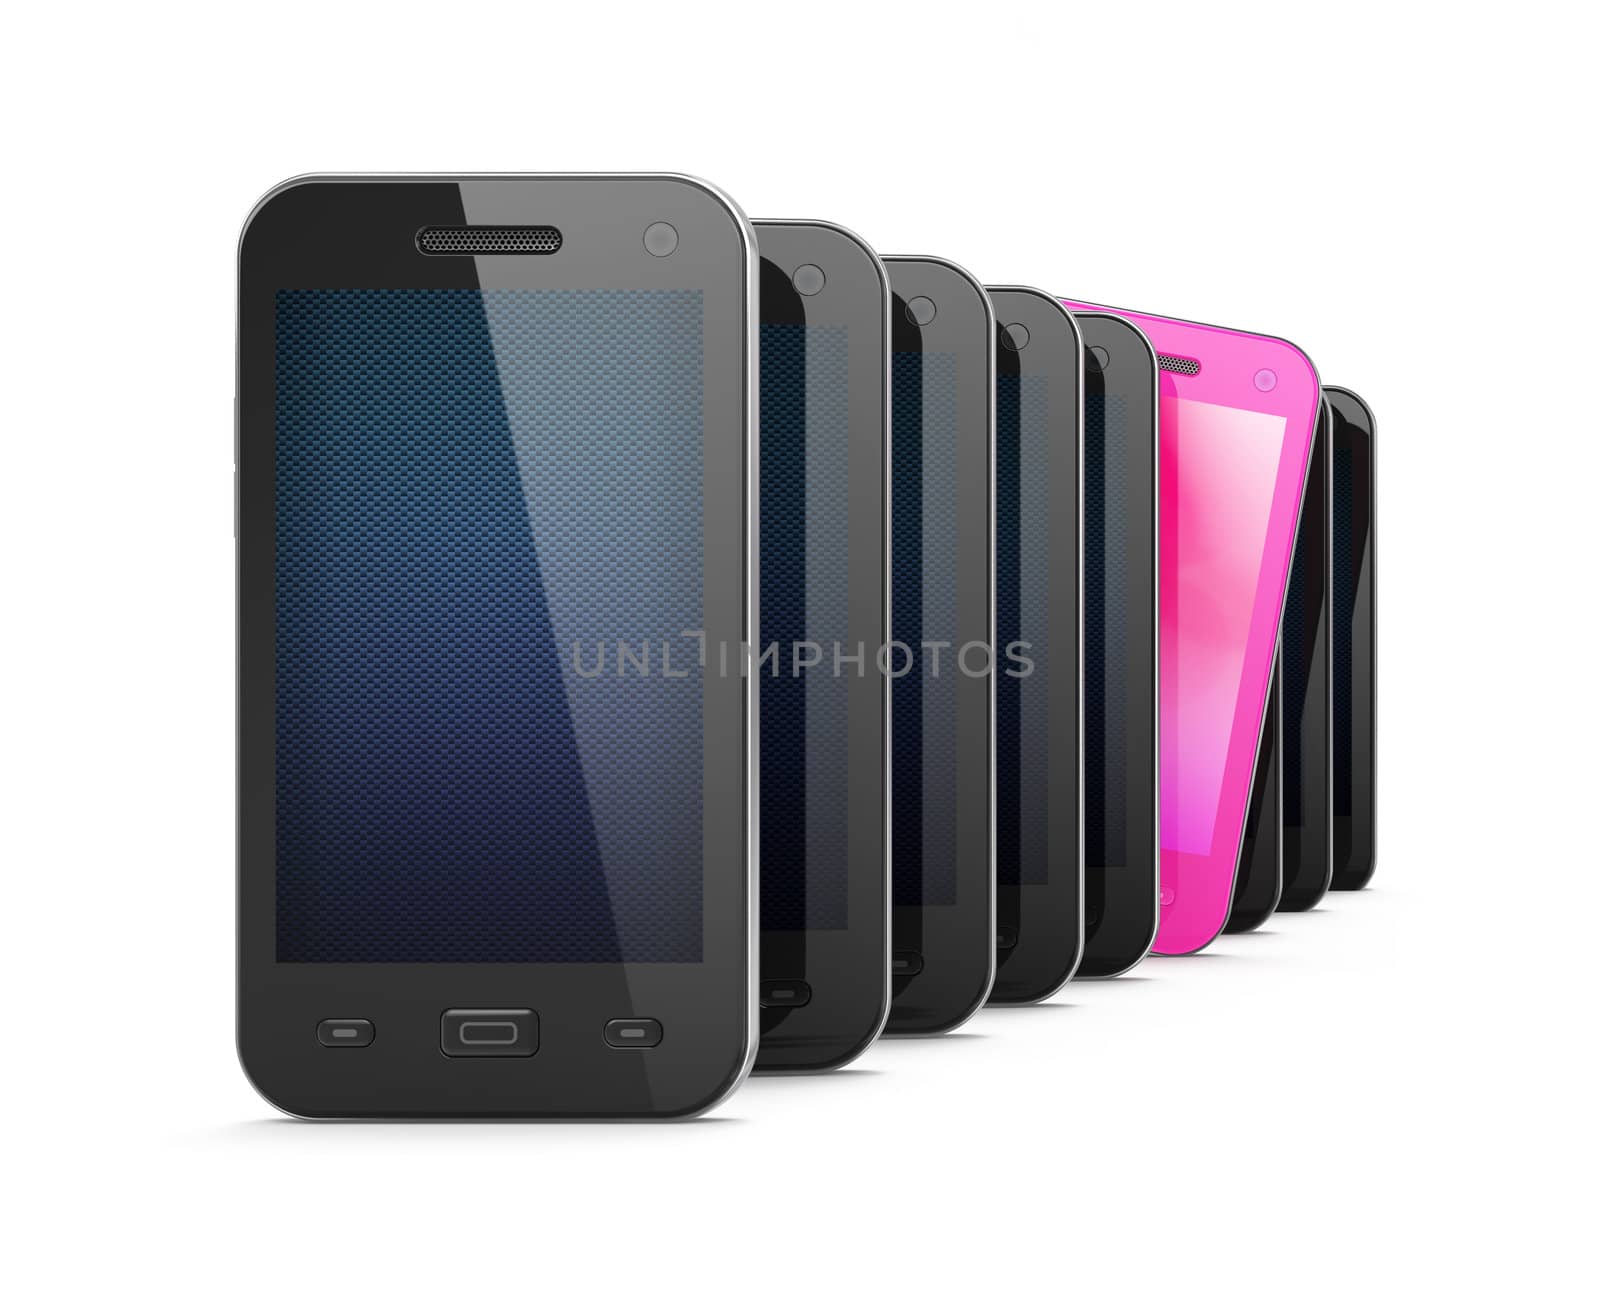 Beautiful pink smartphone among many black smartphones by maxkabakov